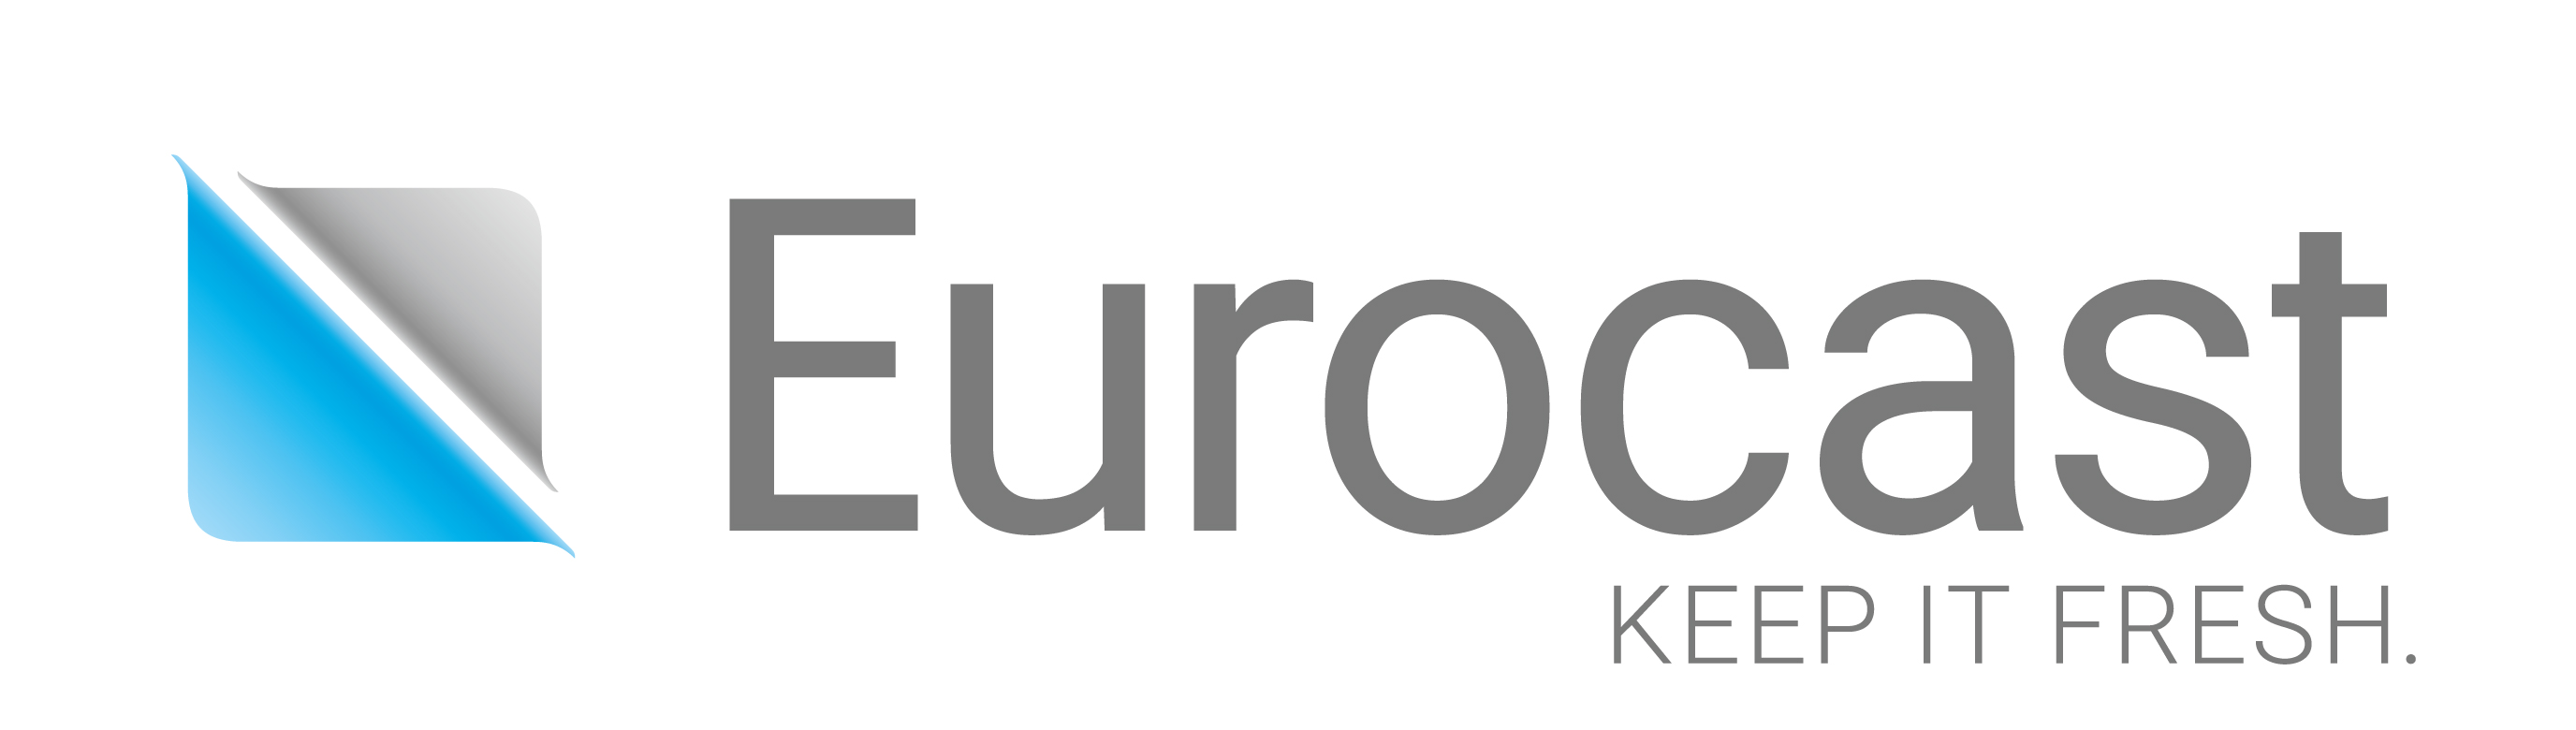 logo Eurocast keep it fresh